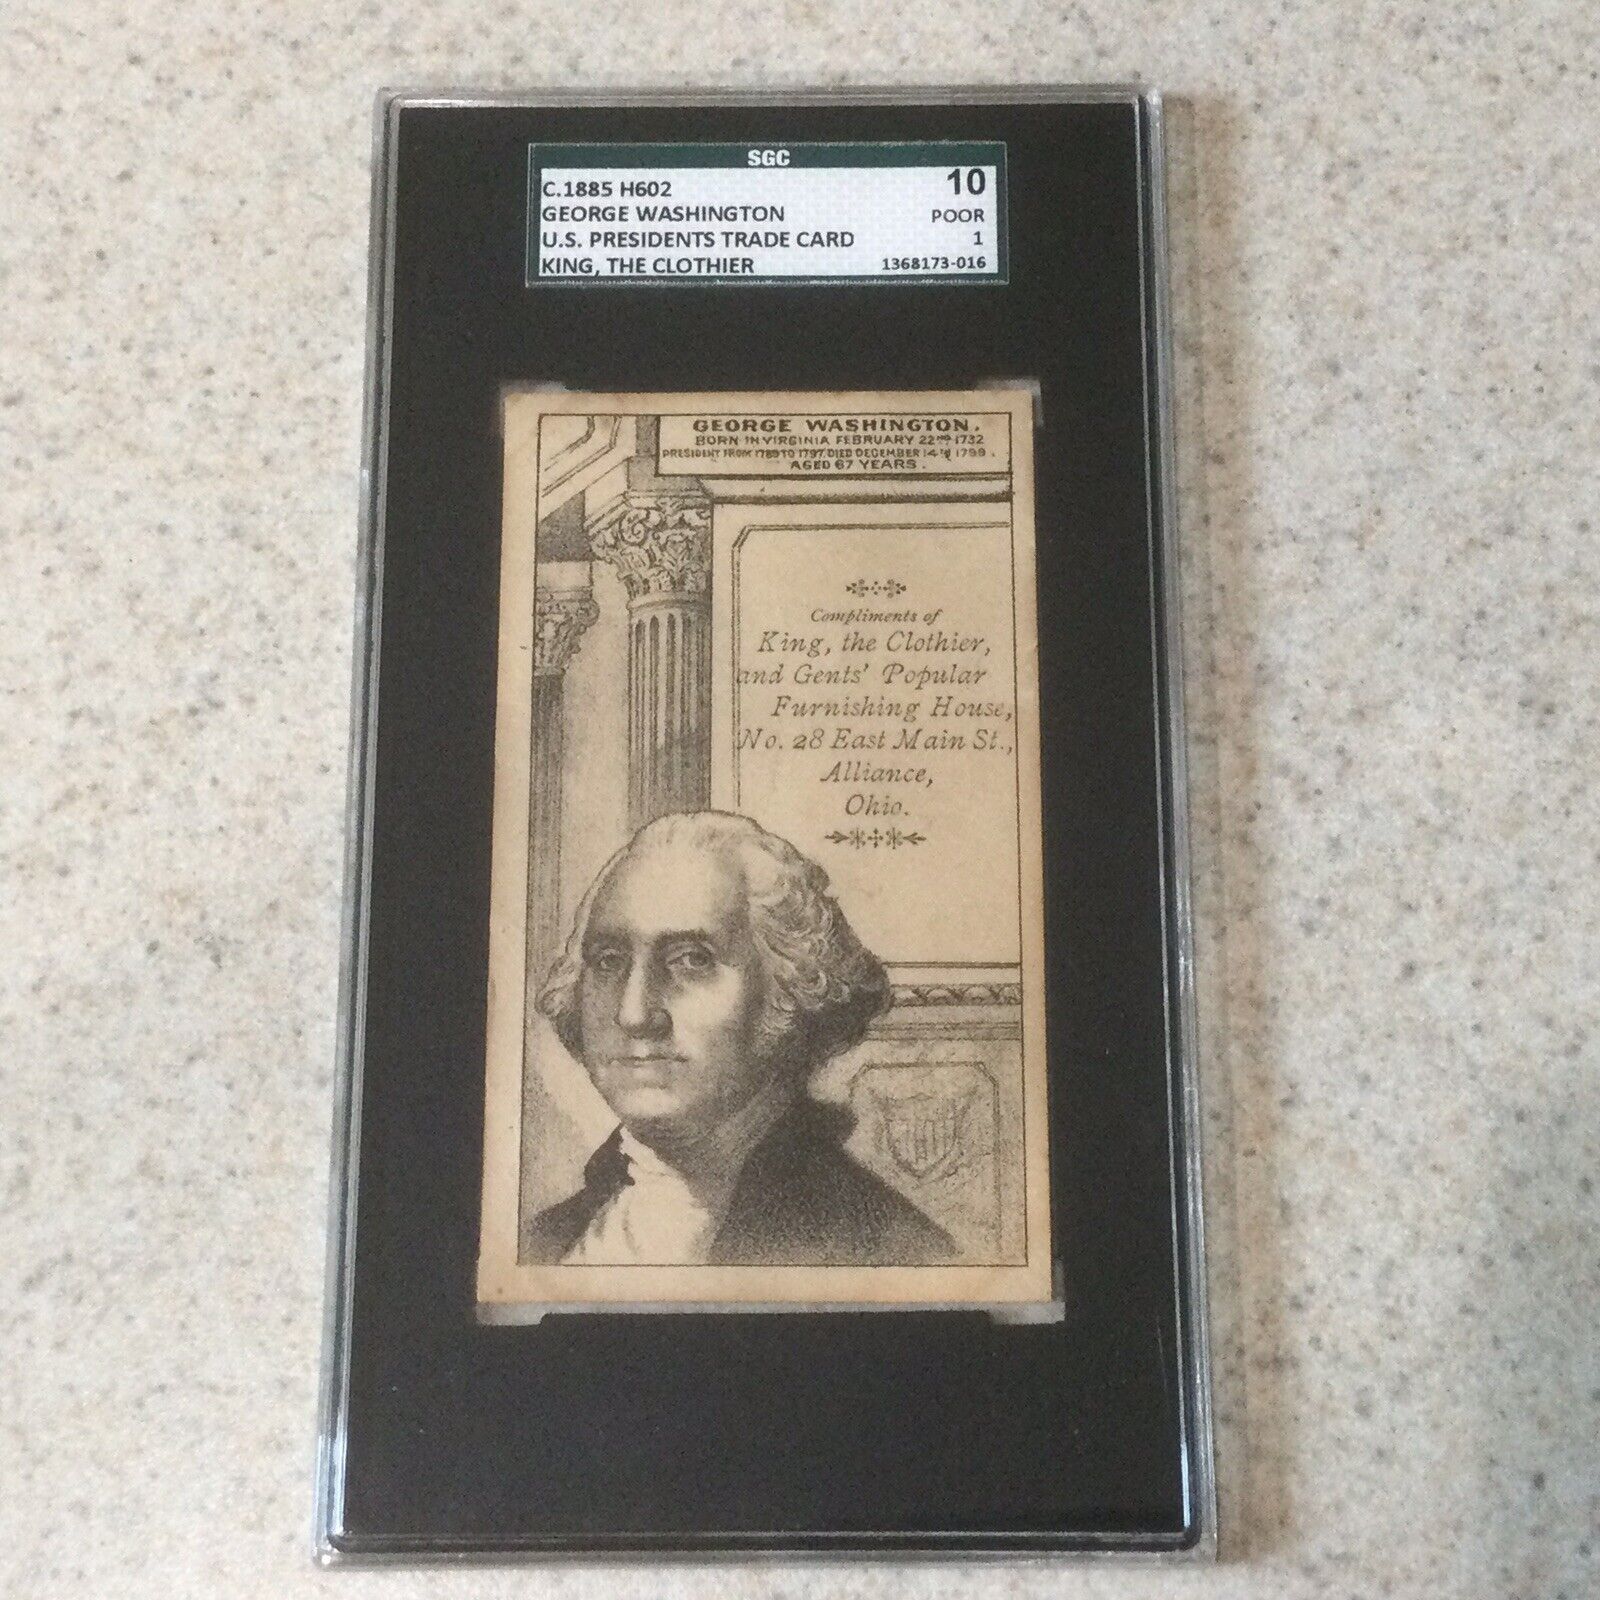 c.1885 H602 U.S. Presidents Trade Card- George Washington SGC Poor 1